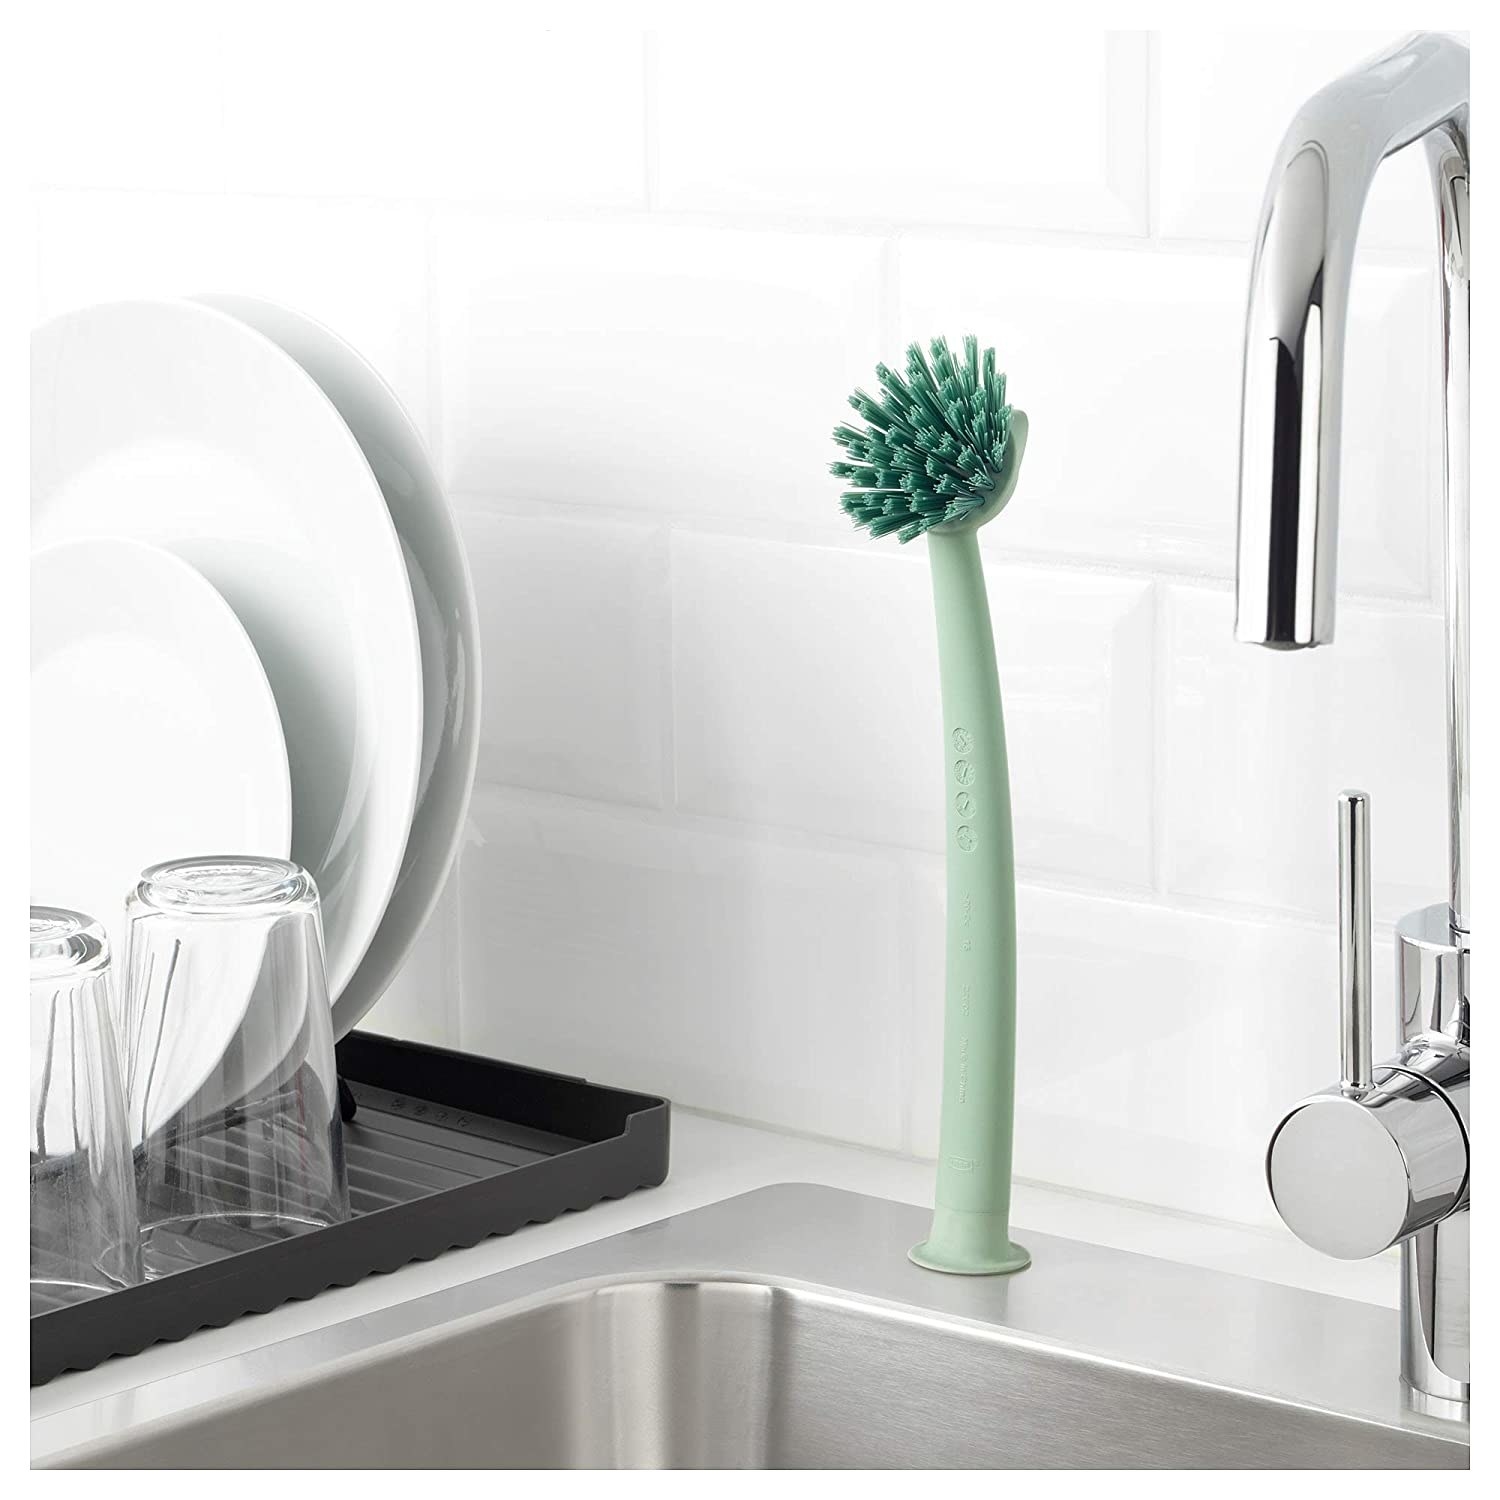 IKEA ANTAGEN Kitchen Scrub Brush Sink Cleaning Dish Washing